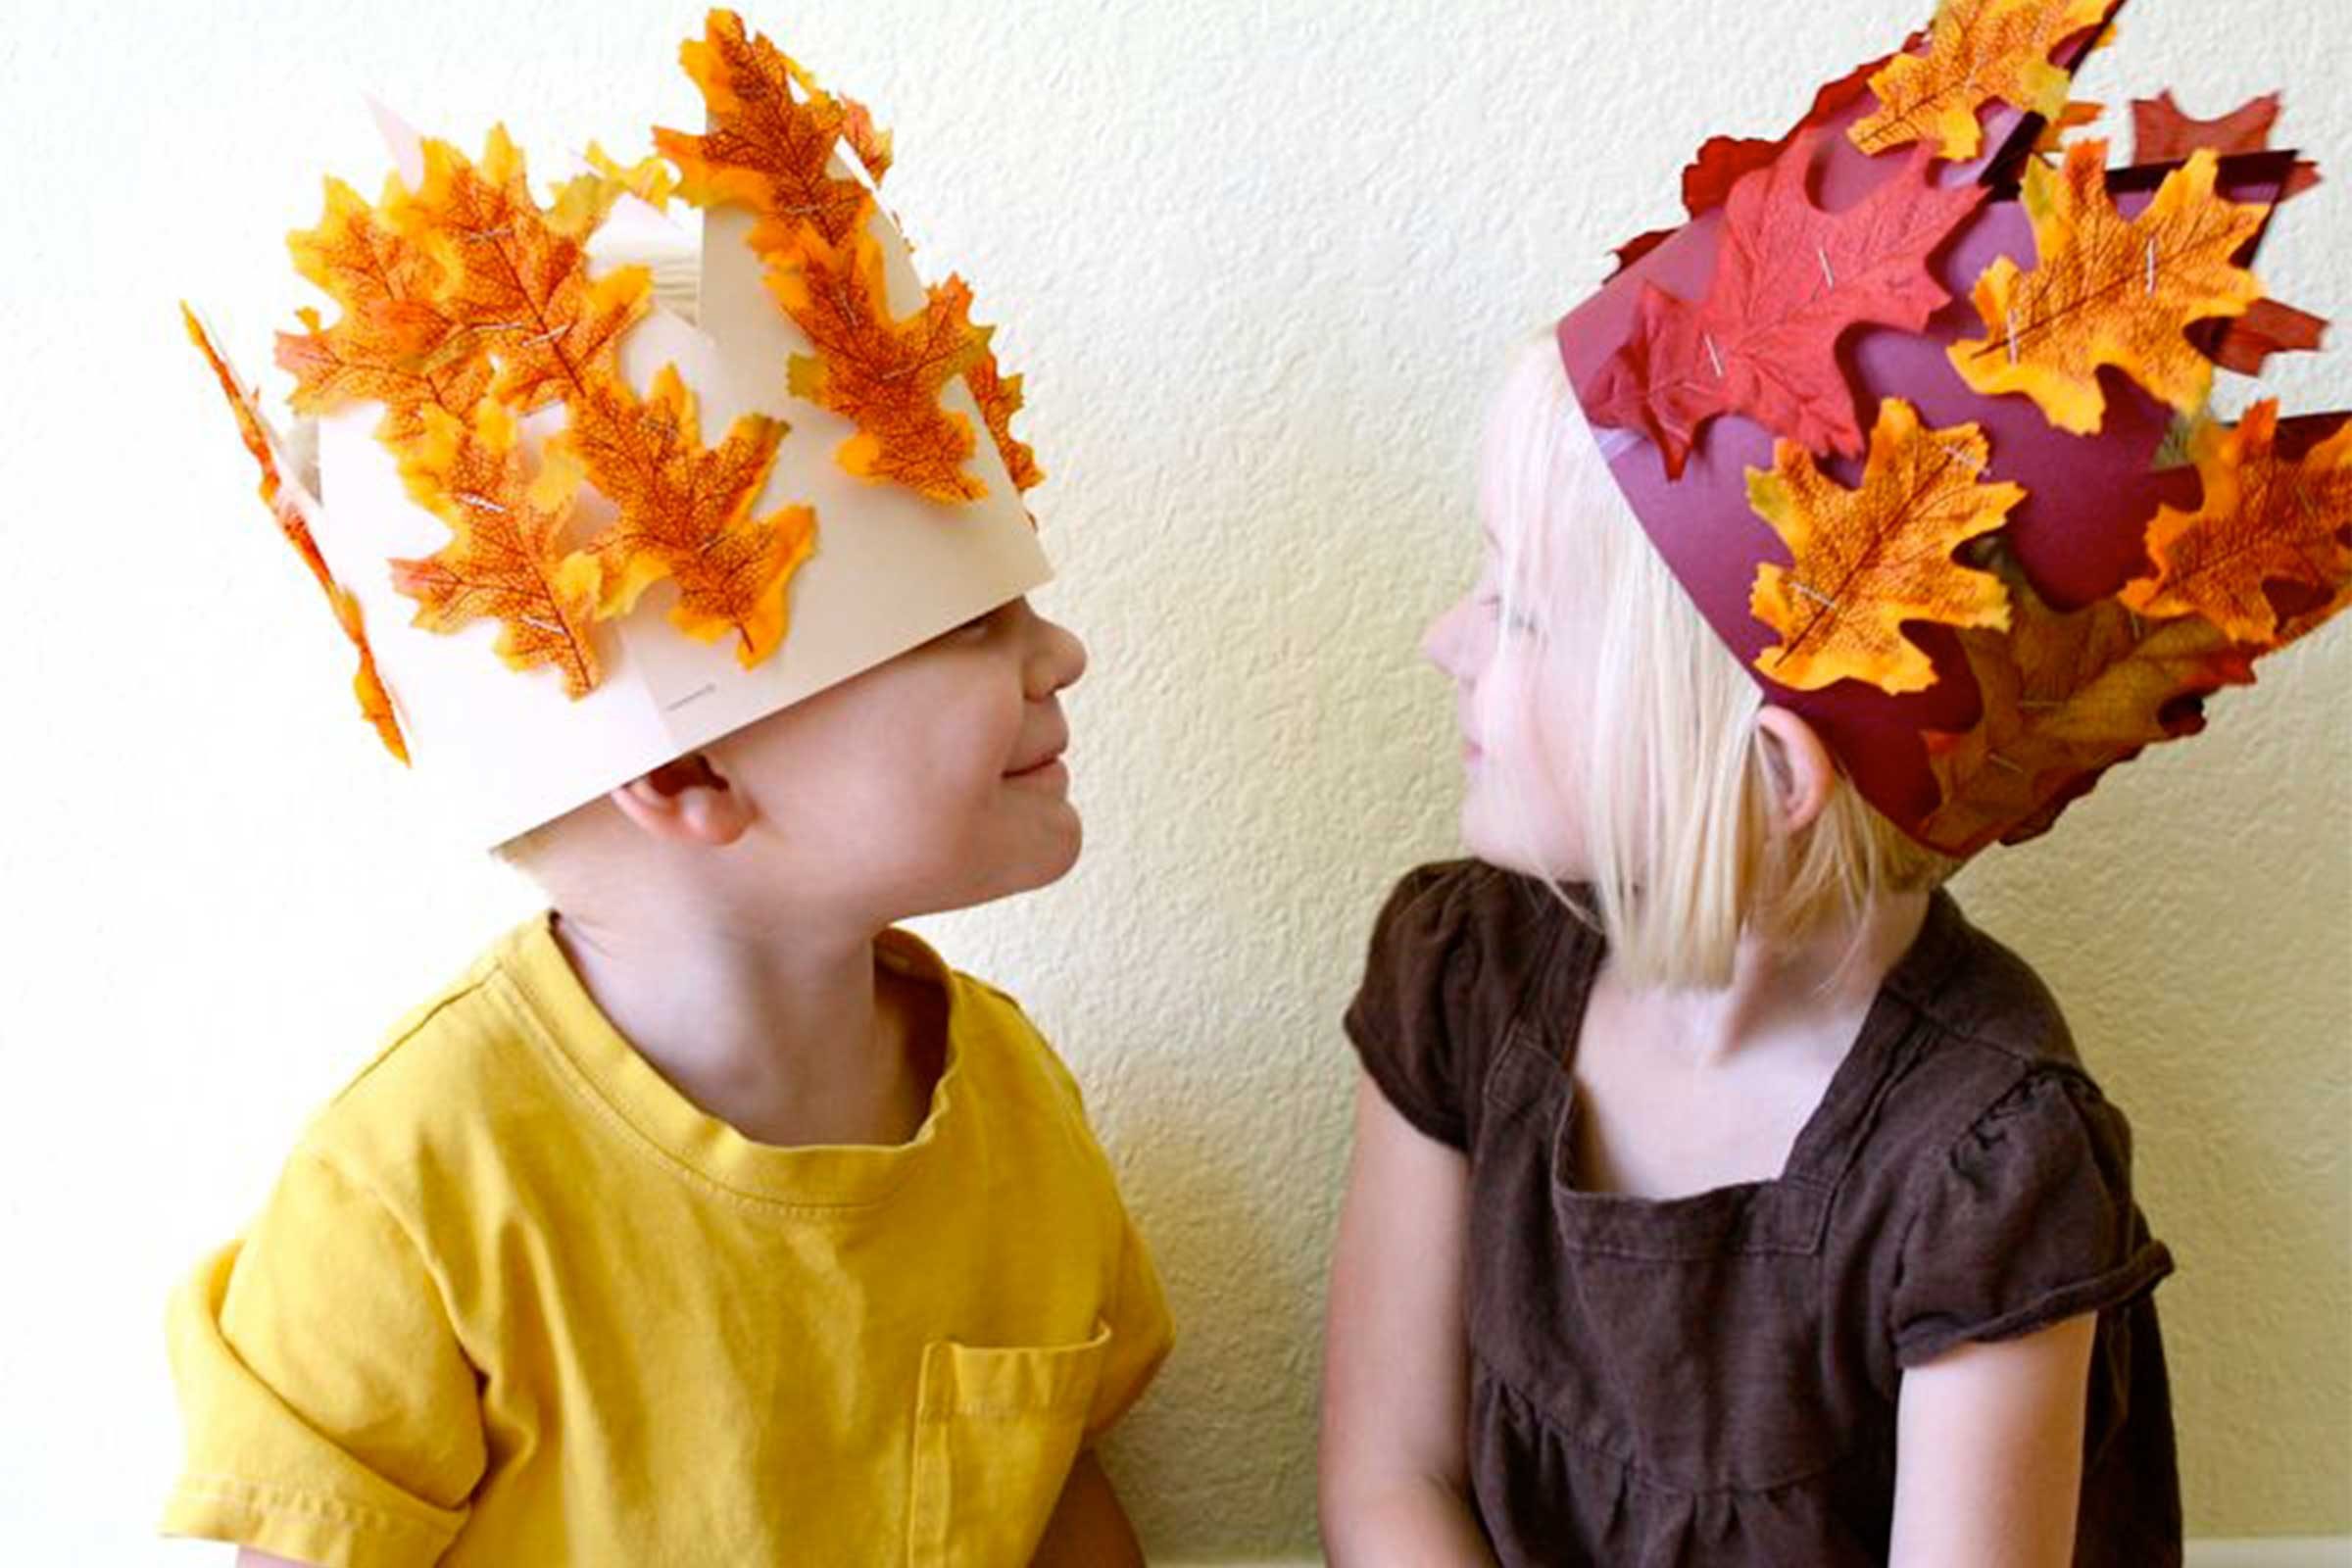 https://www.rd.com/wp-content/uploads/2016/10/13-thanksgiving-crafts-kids-Made-Everyday.jpg